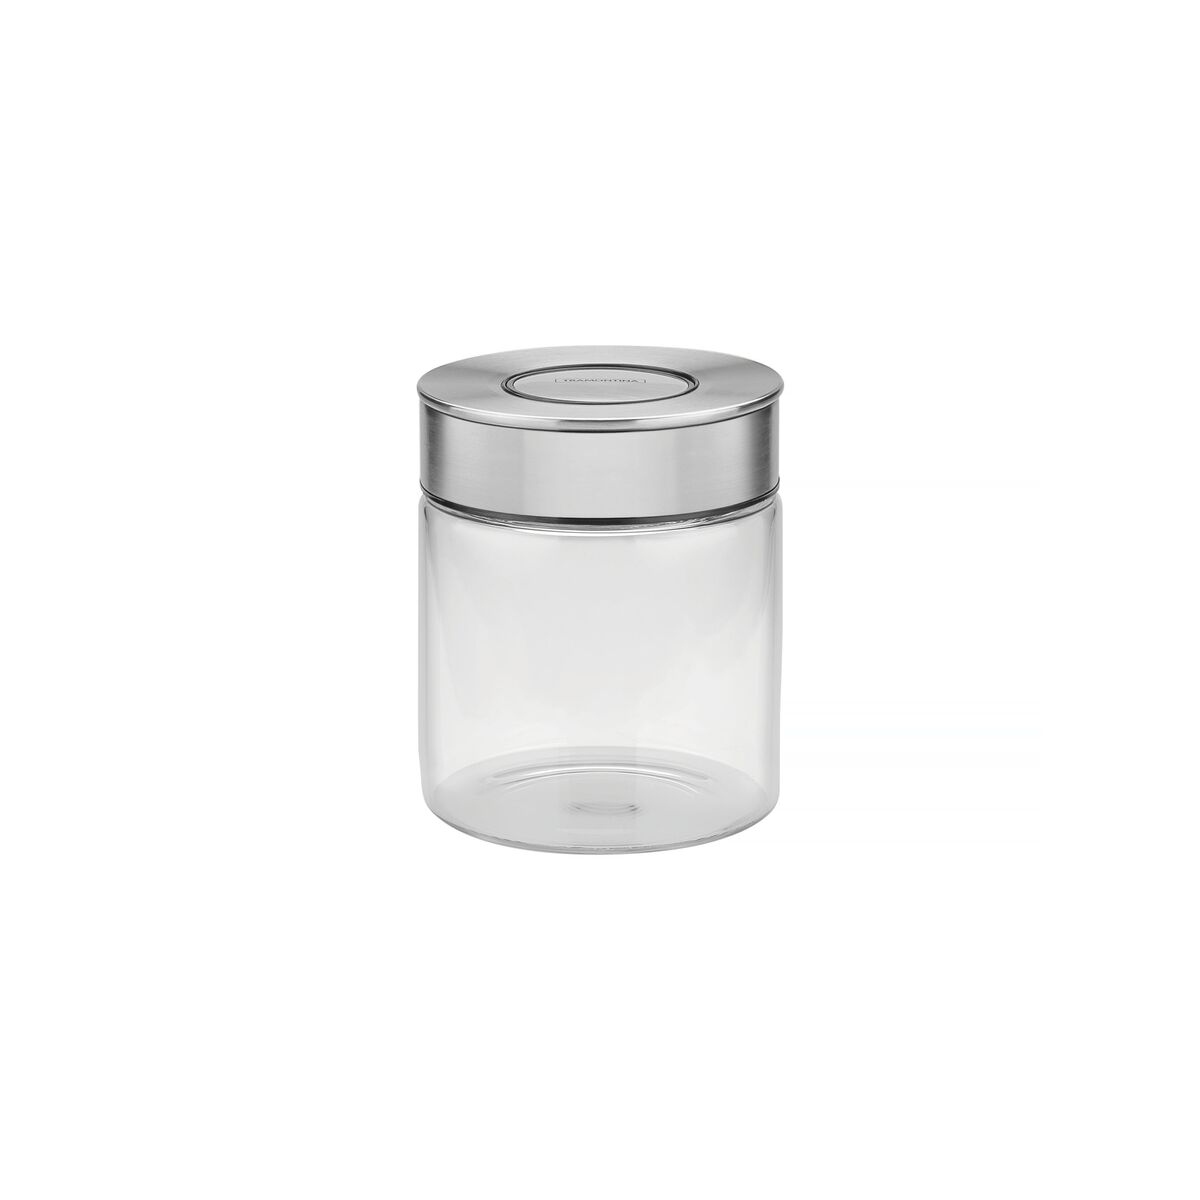 Tramontina Purezza glass jar with stainless steel lid, 0.7 L